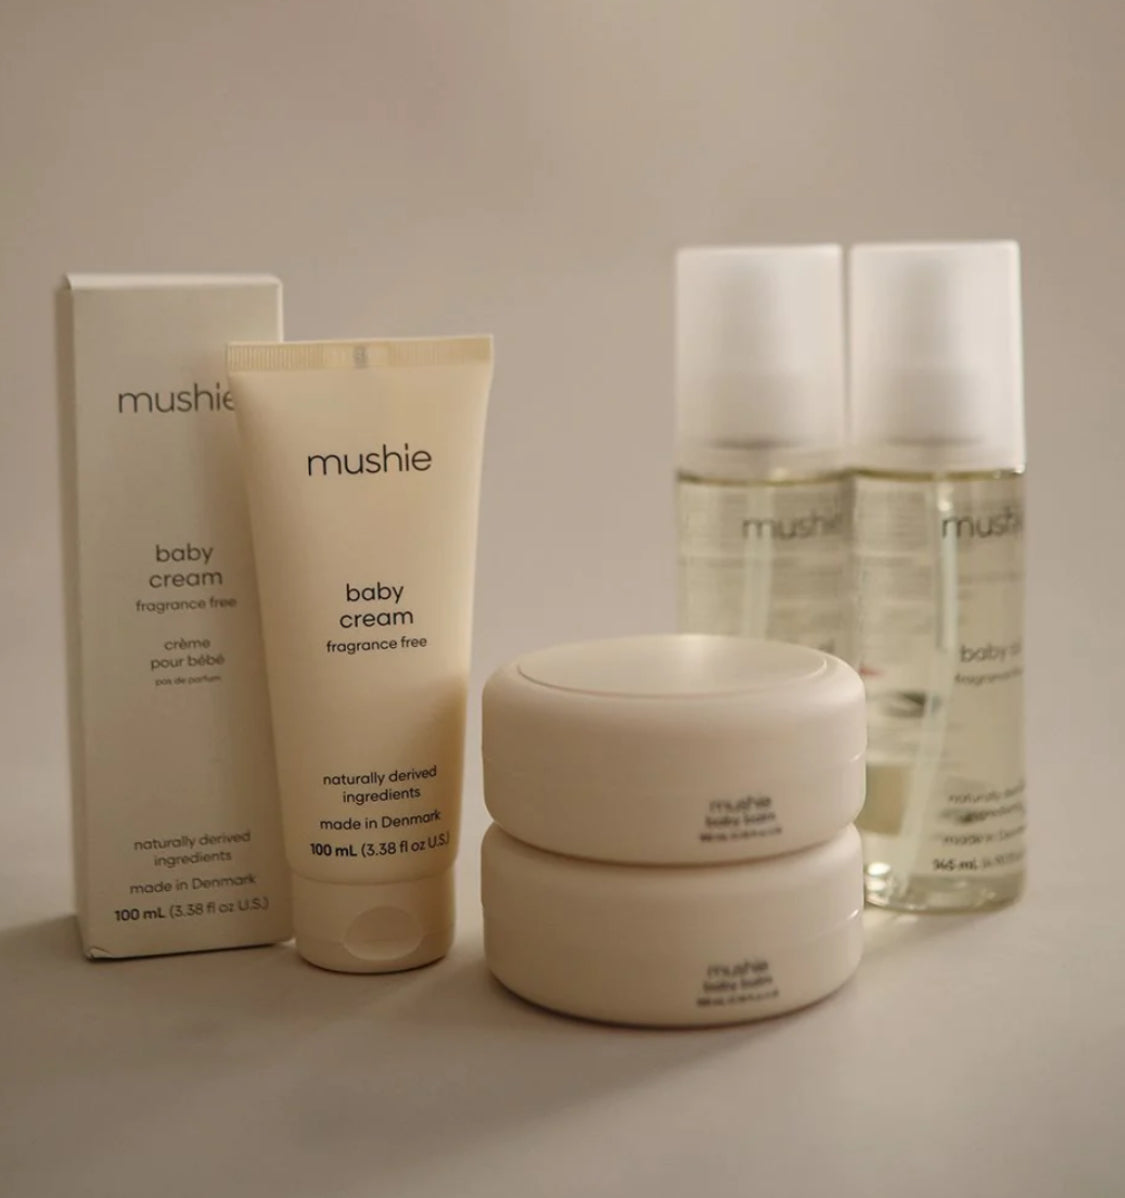 Mushie Baby Cream - fragrance free